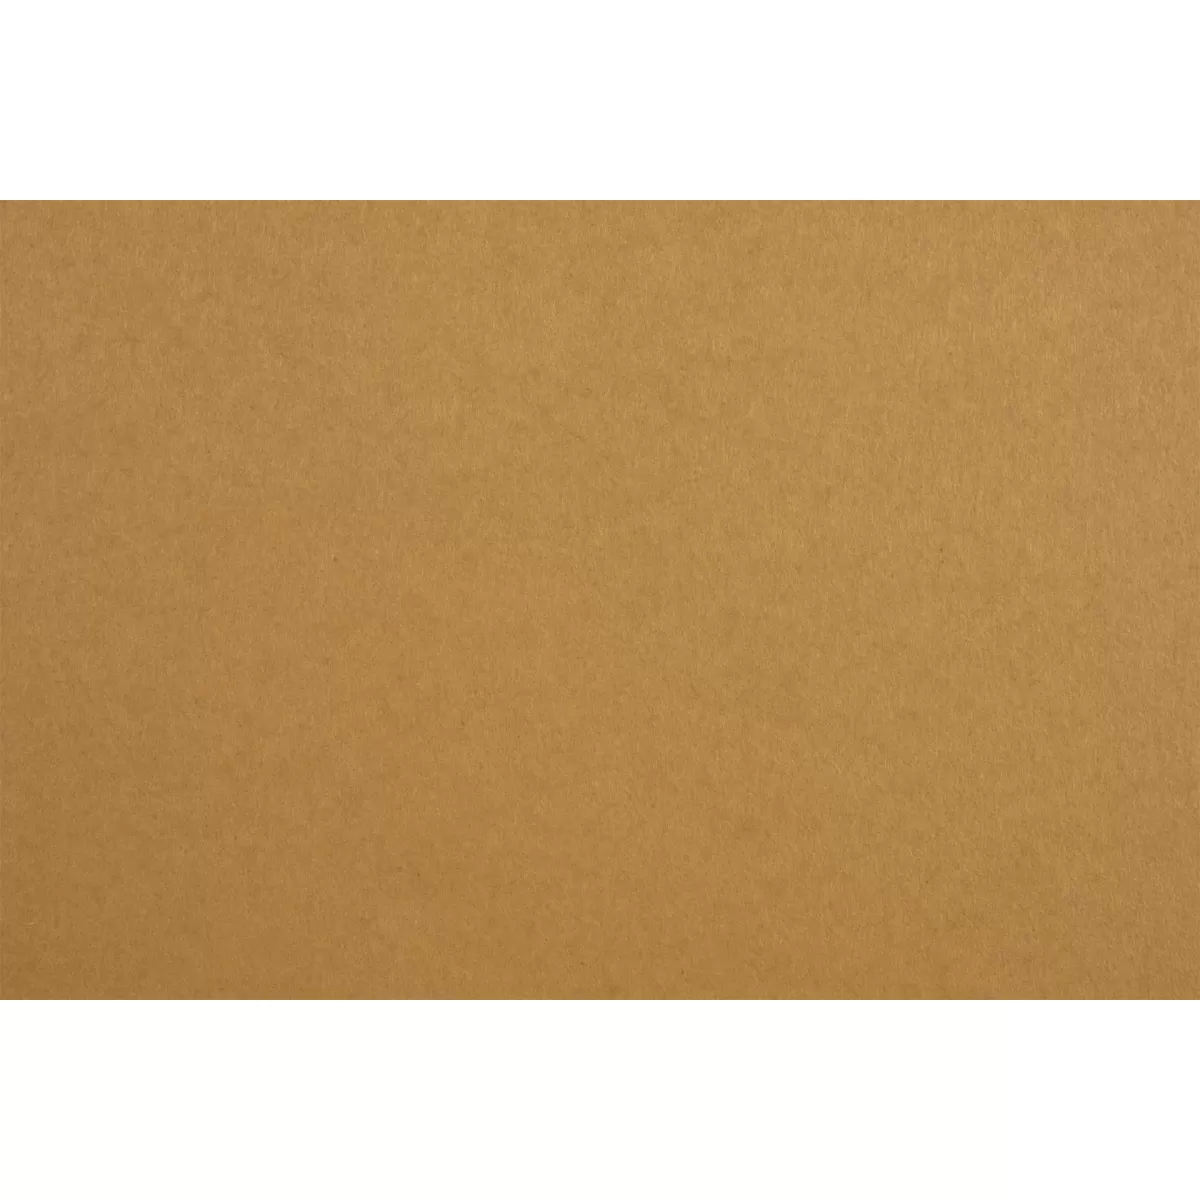 Fabriano Картон Colore, 70 x 100 cm, 200 g/m2, № 249, тъмнобежов